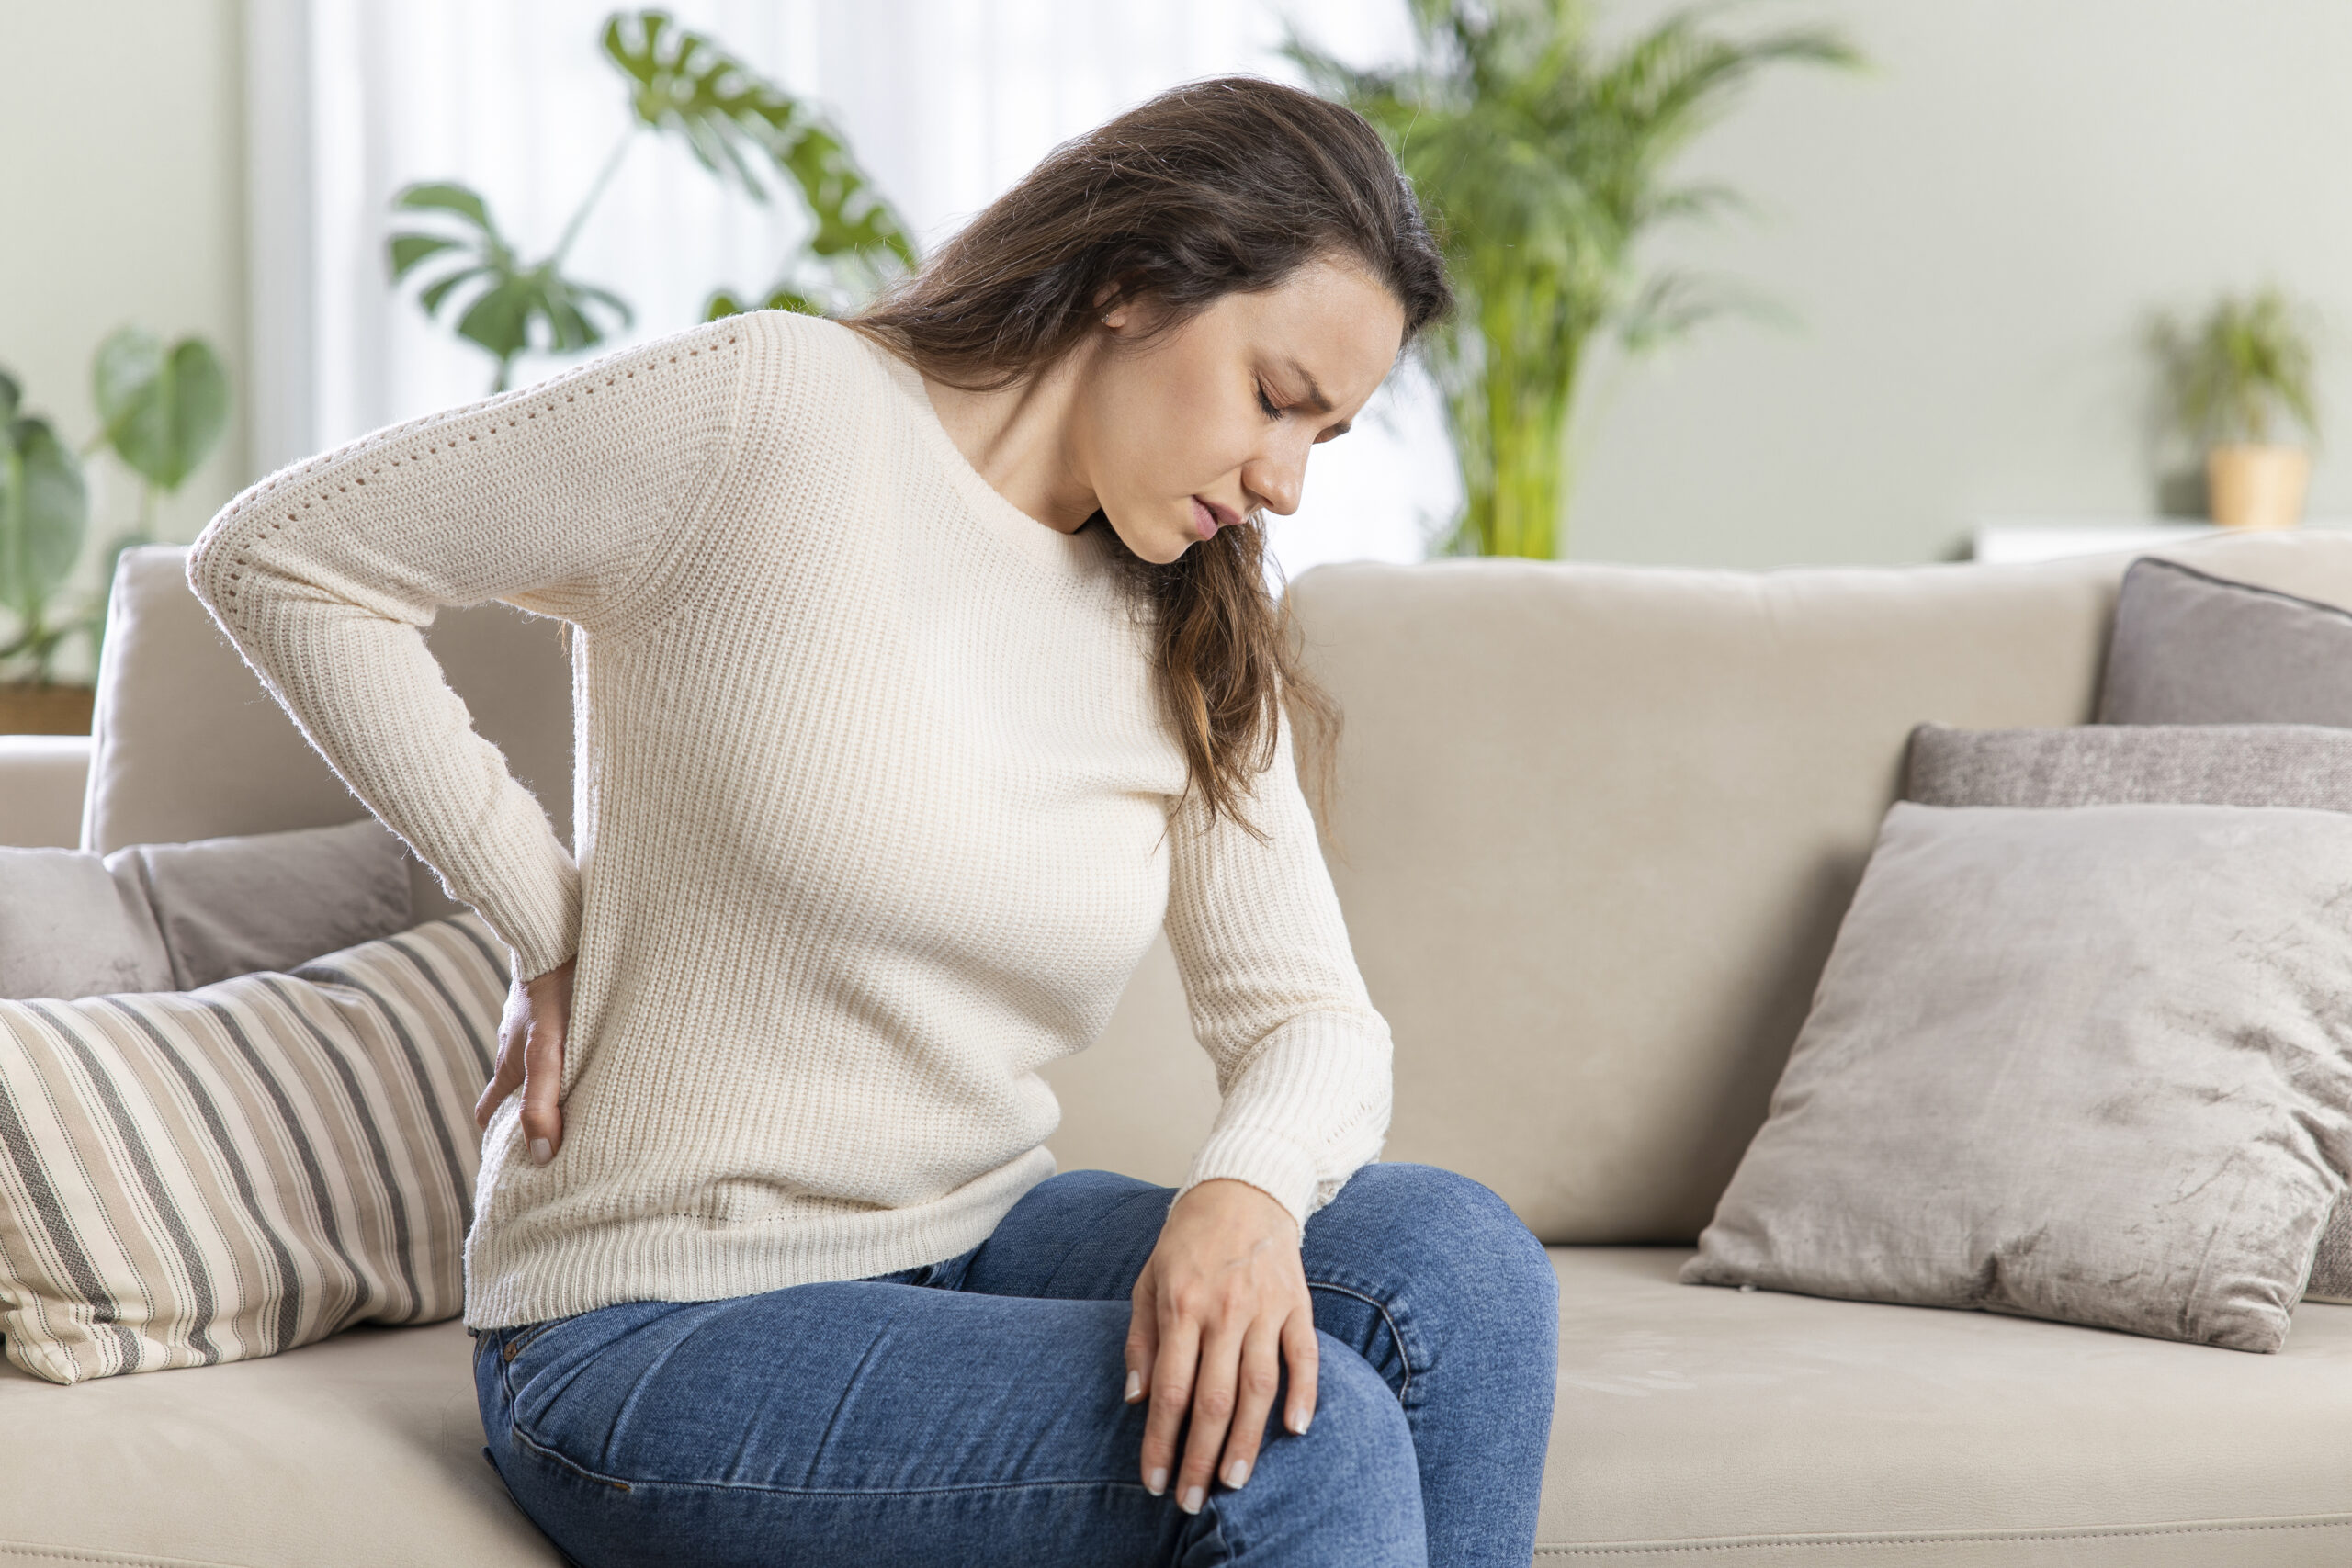 Ways to Treat Chronic Back Pain Without Surgery